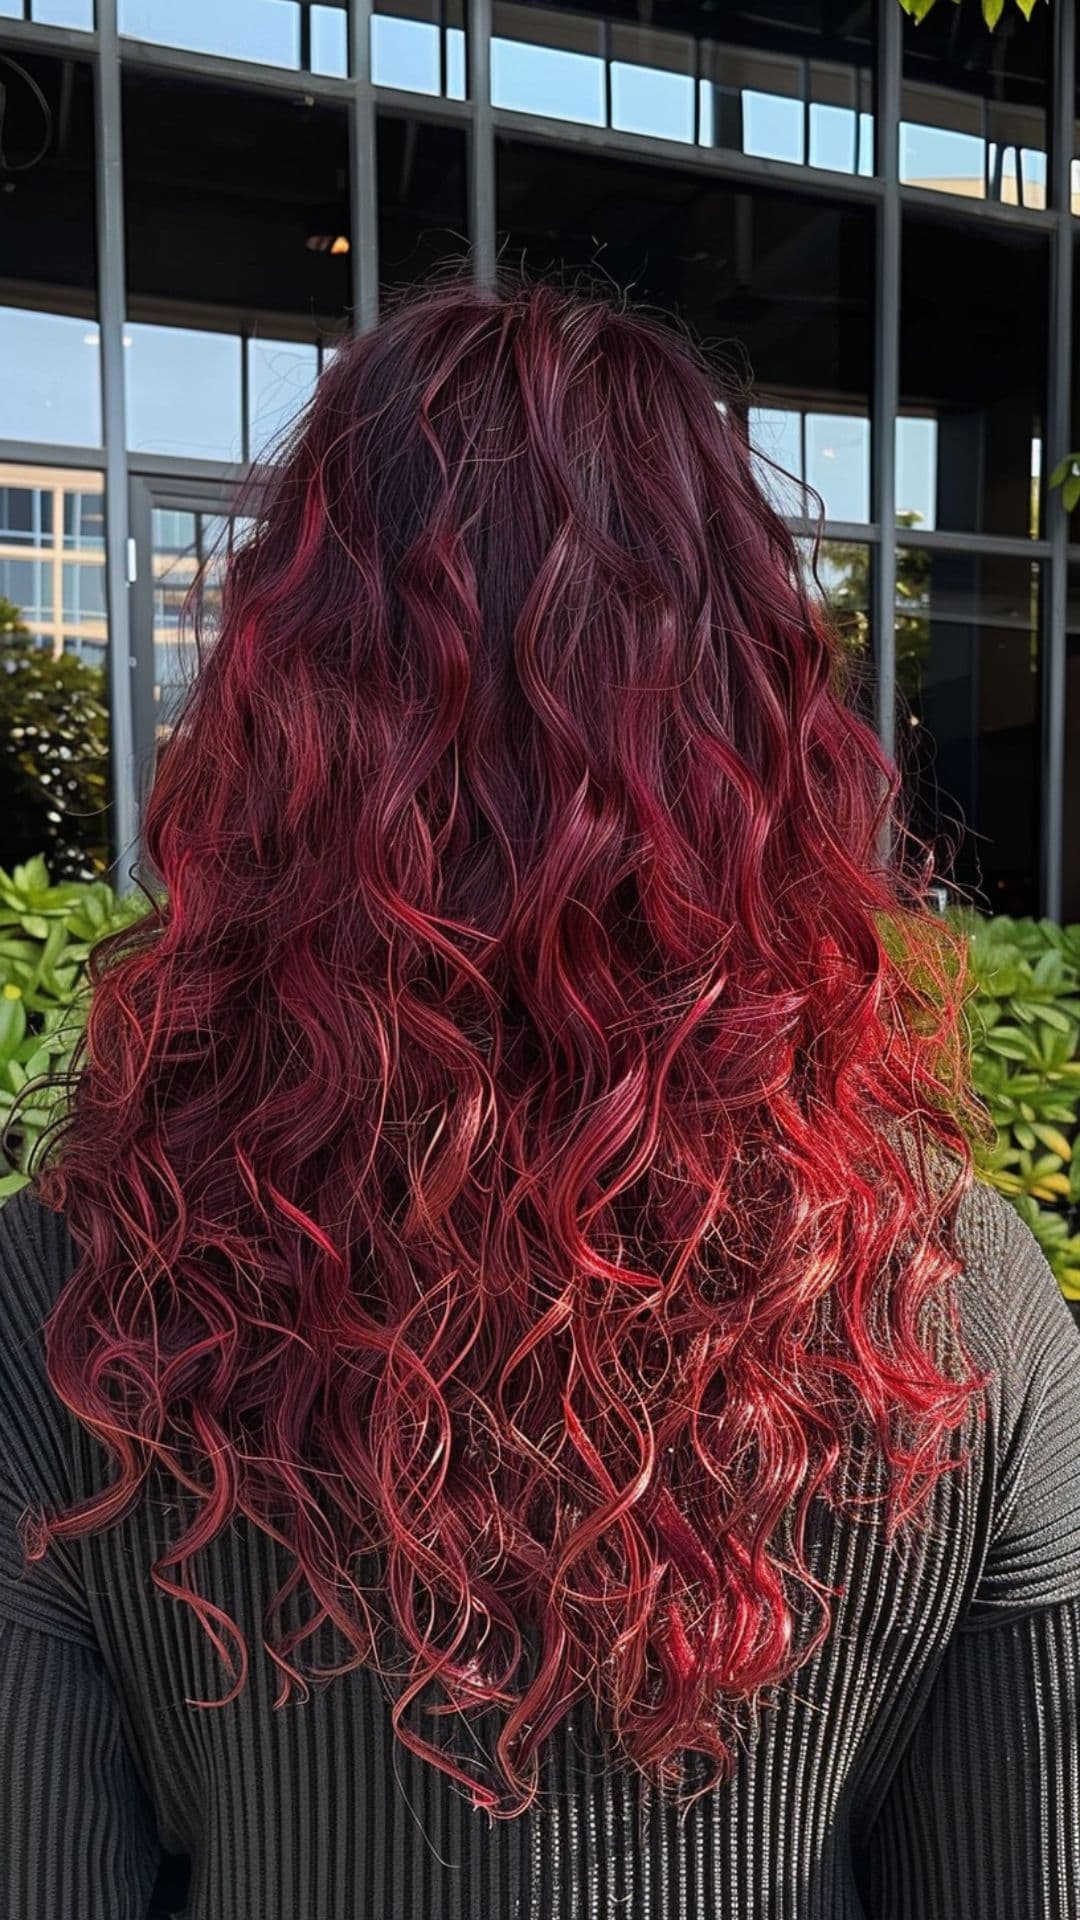 A woman modelling a deep burgundy curly hair.